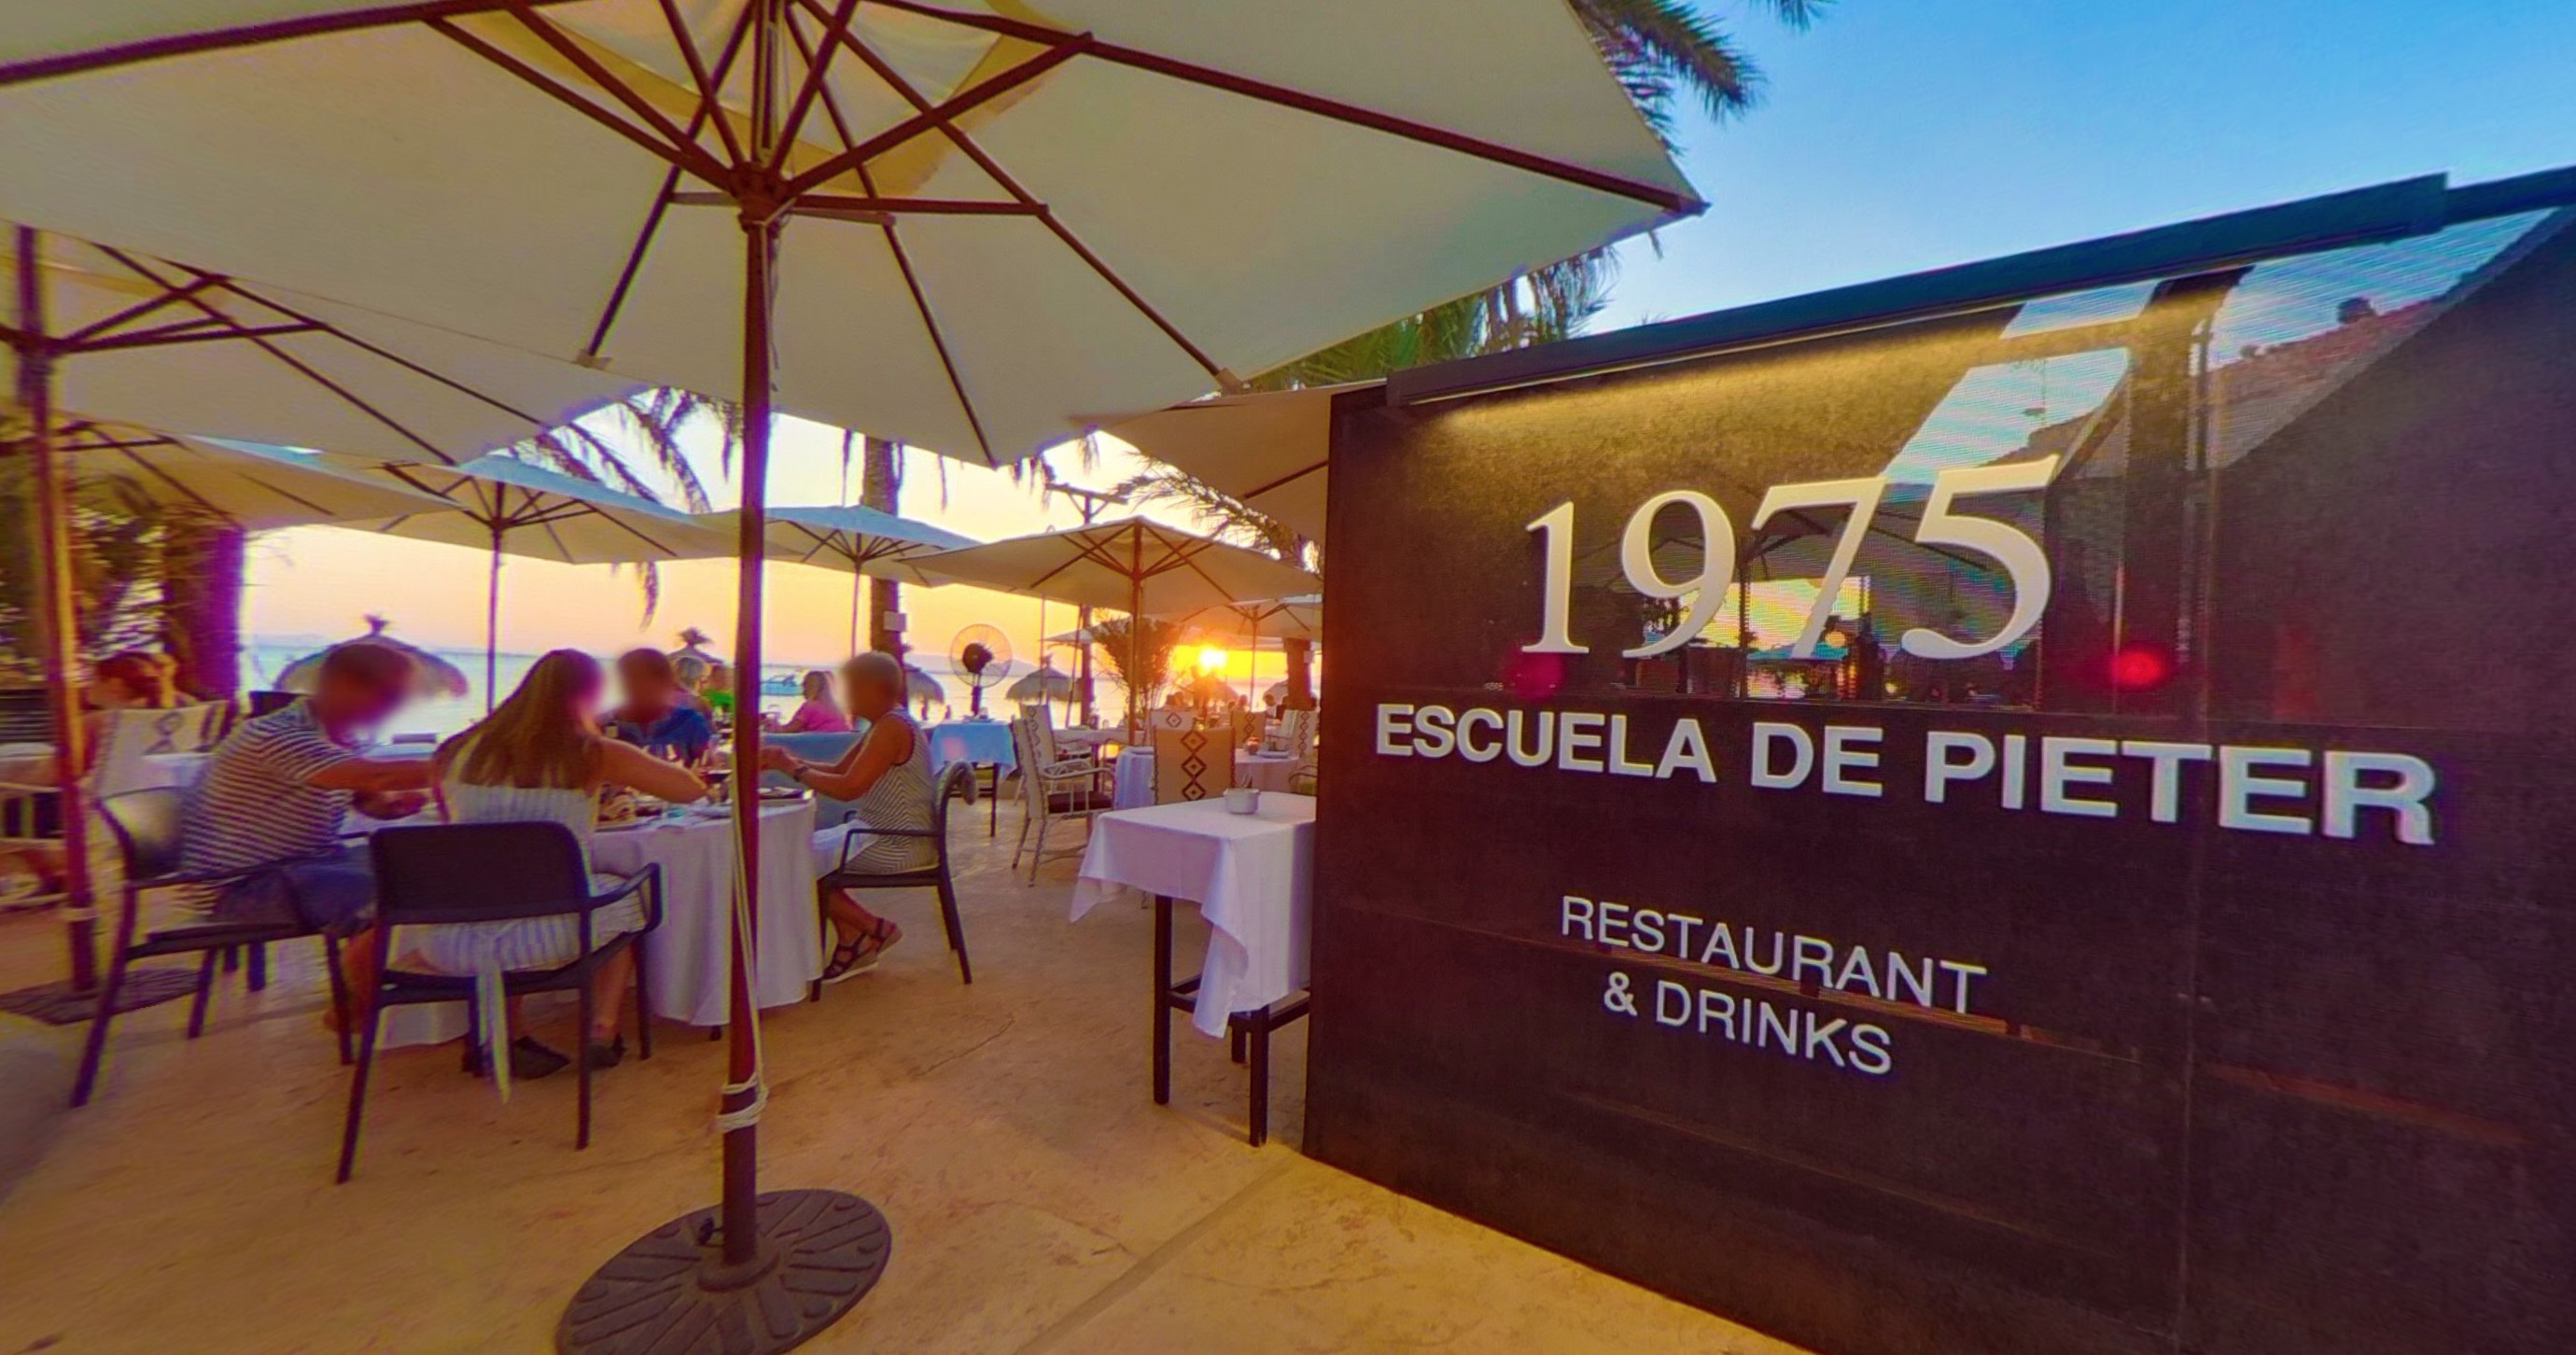 Tour Virtual La escuela de Pieter, Restaurante en La Manga del Mar Menor, Cartagena, Murcia - Google Maps / Google Street View